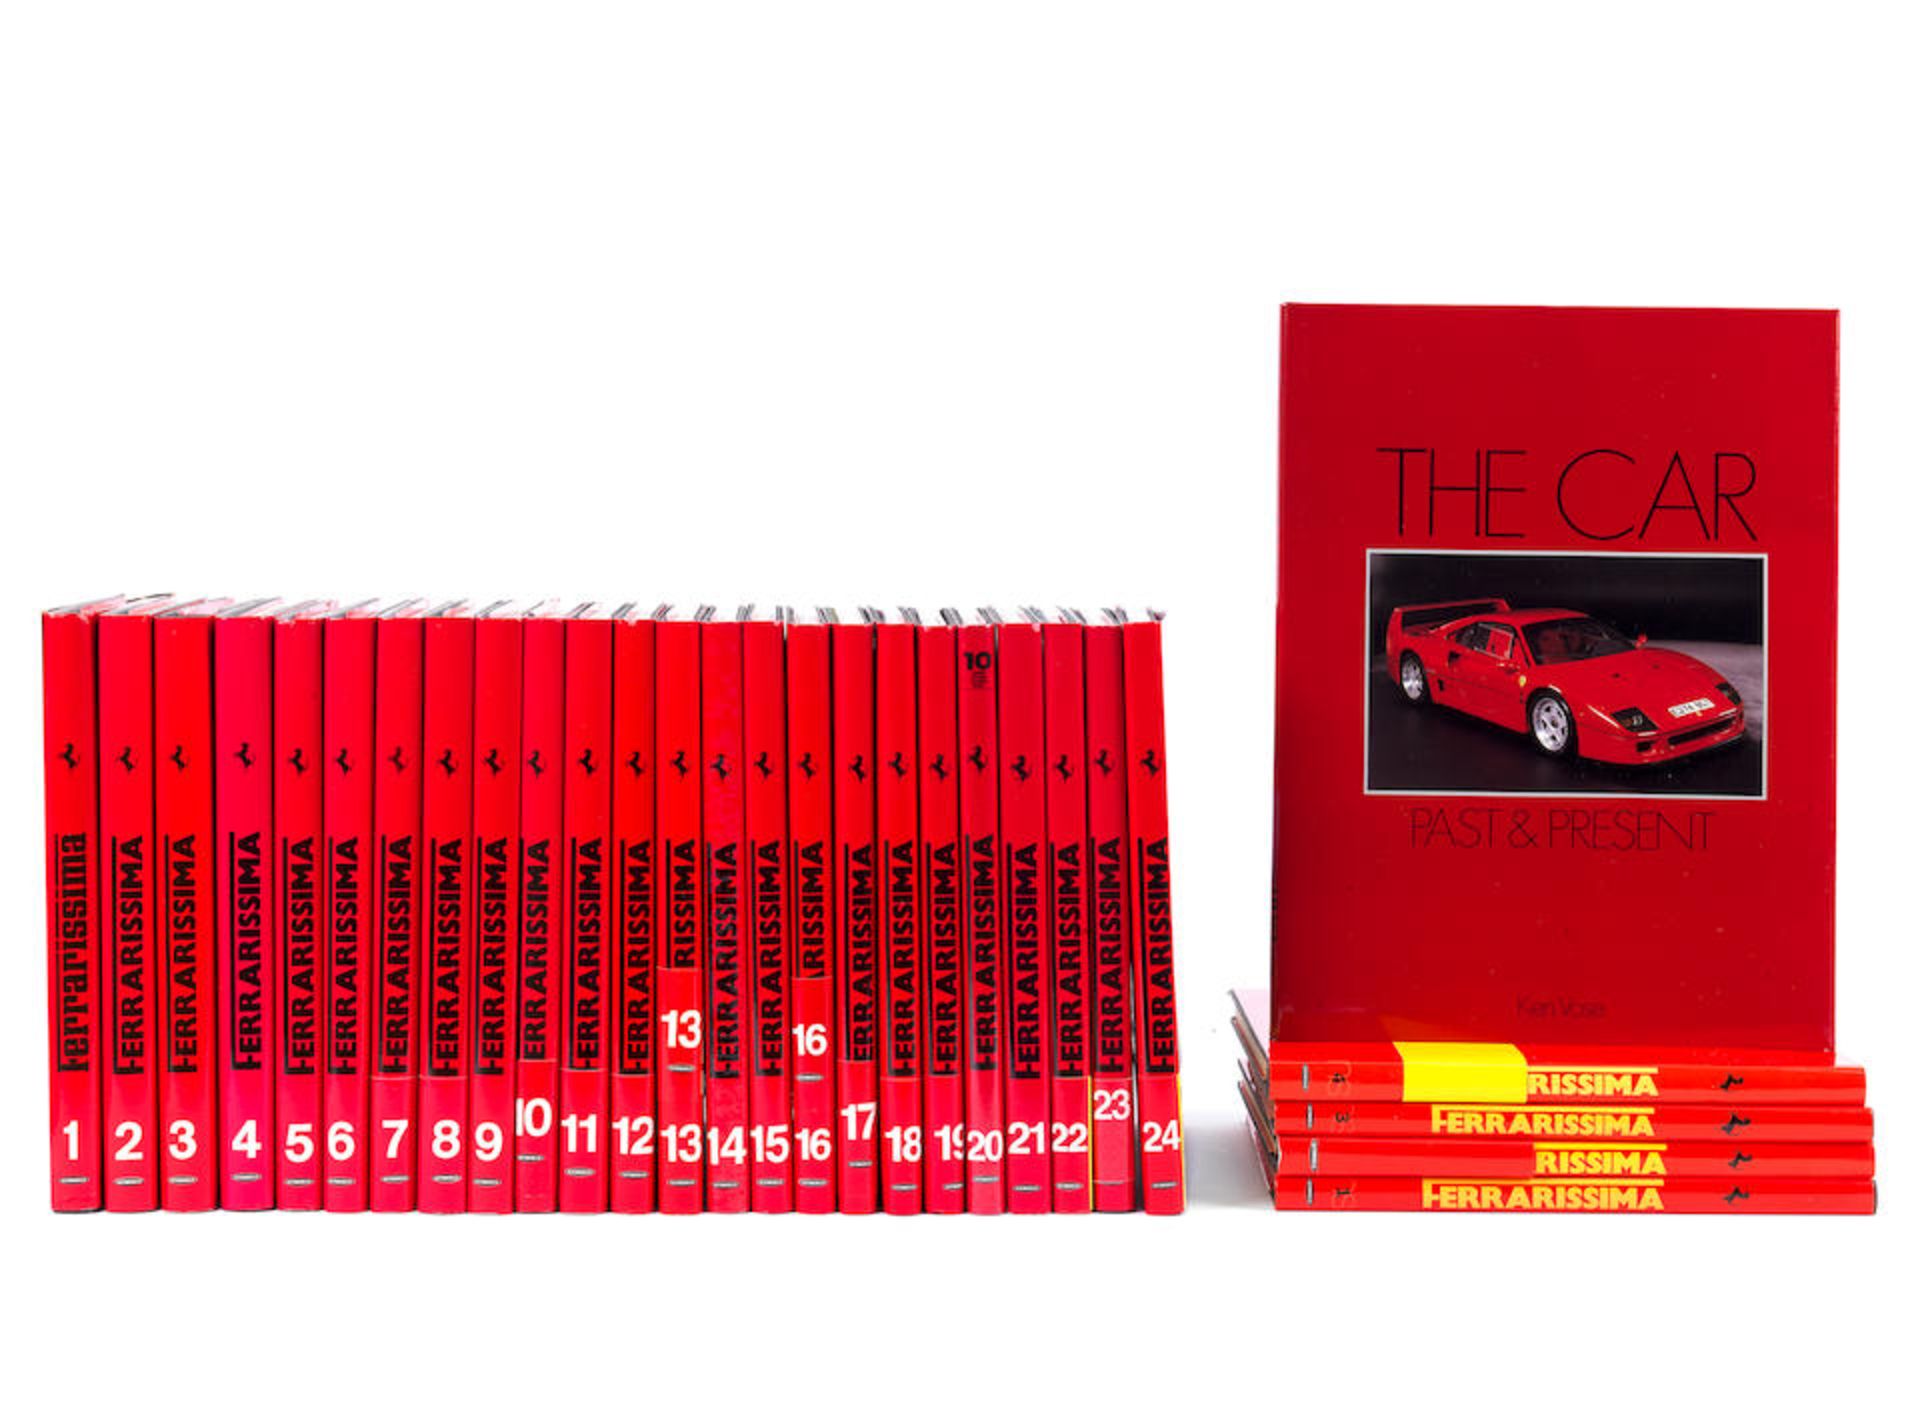 Ferrarissima; first series Volumes 1-24, ((29))